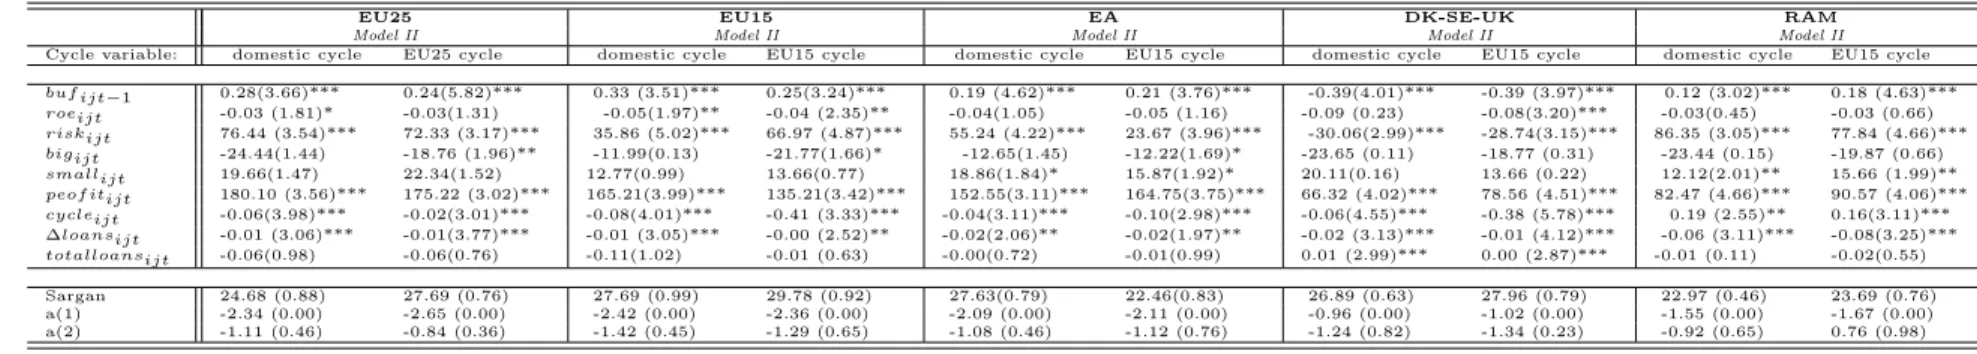 Table 3.6: Two Step GMM Estimates (Model II).